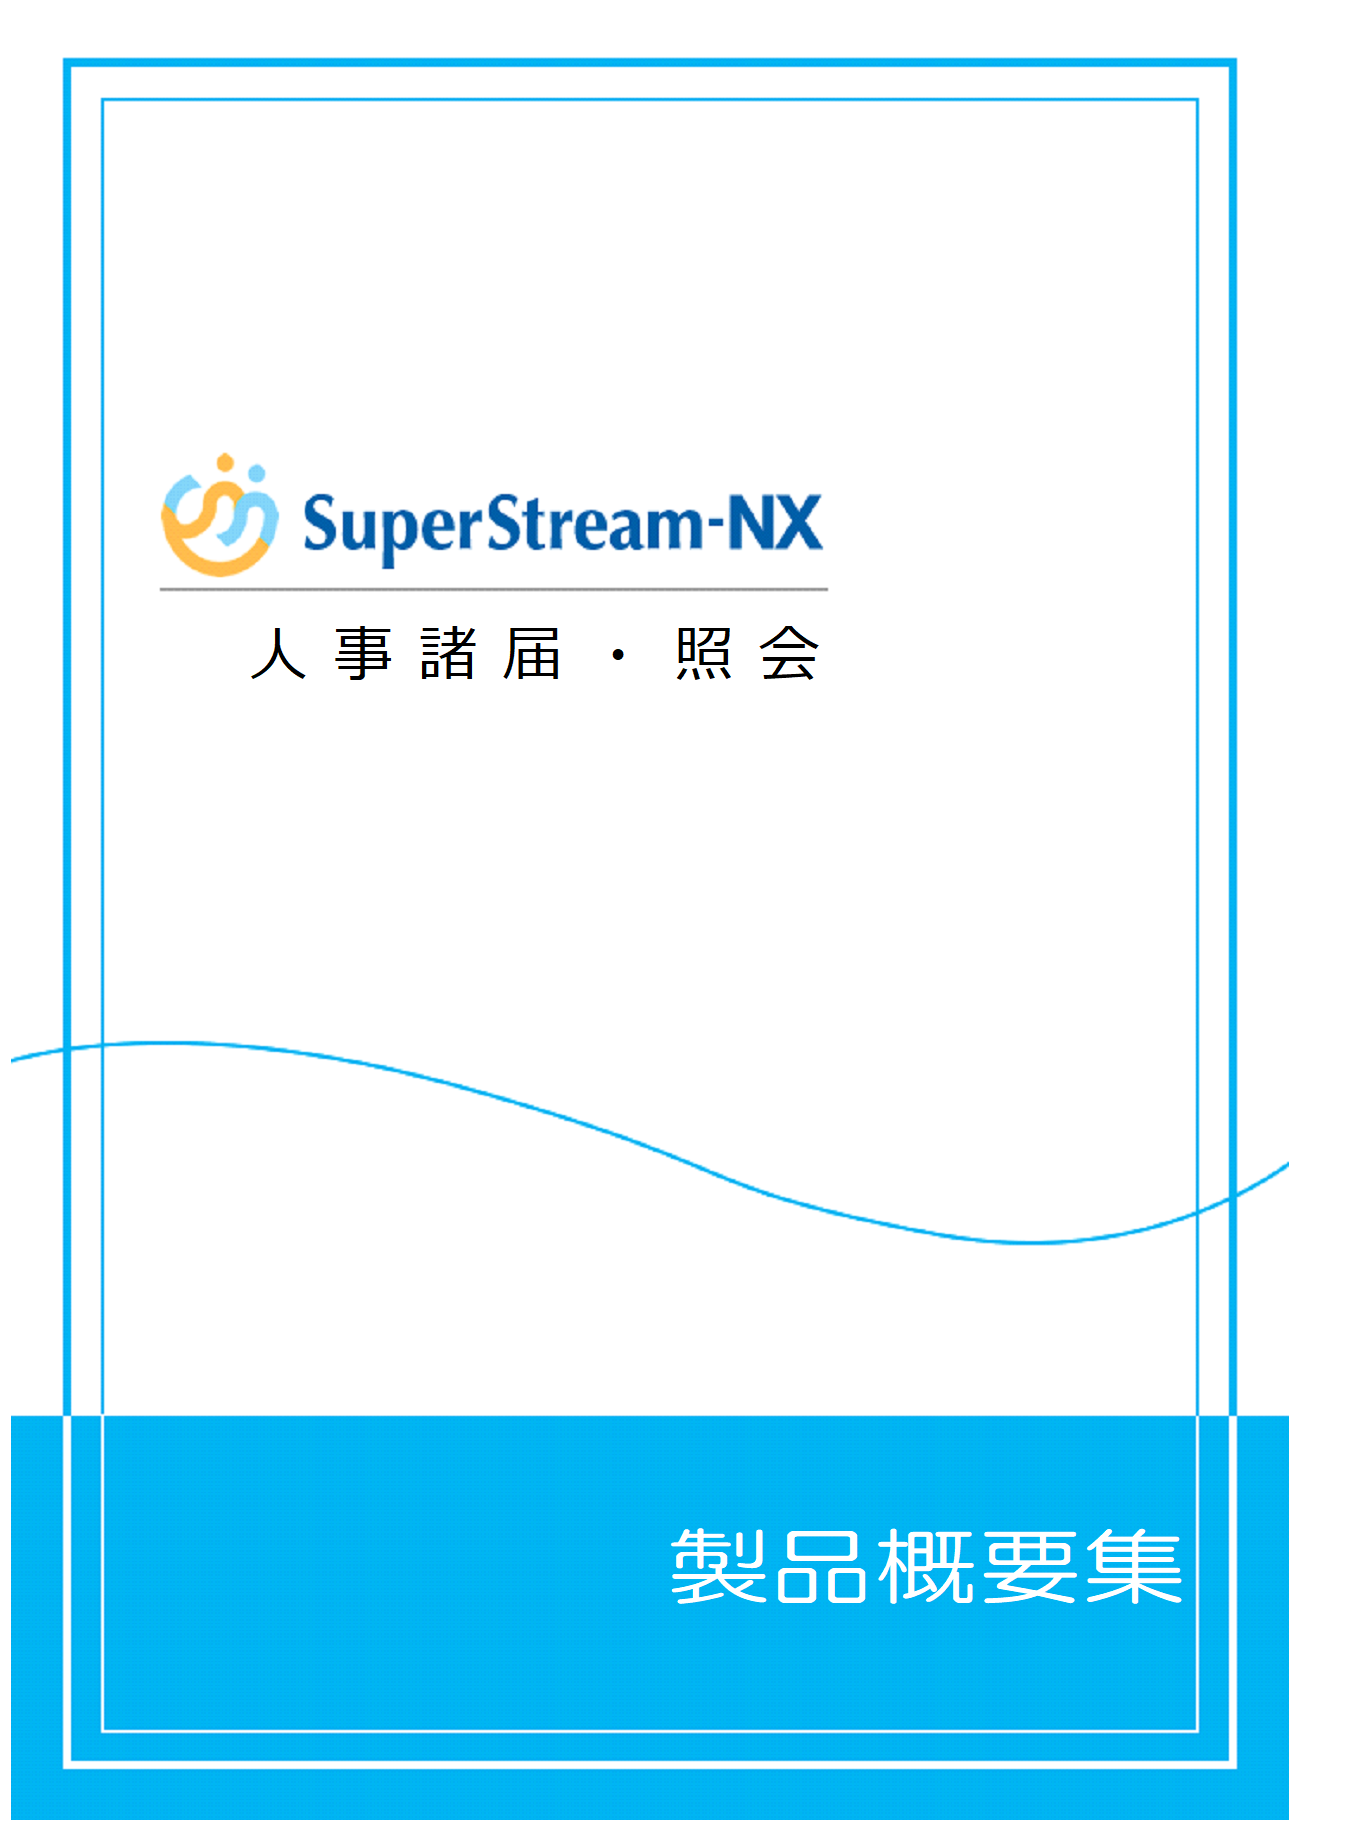 SuperStream-NX 人事諸届・照会製品概要集